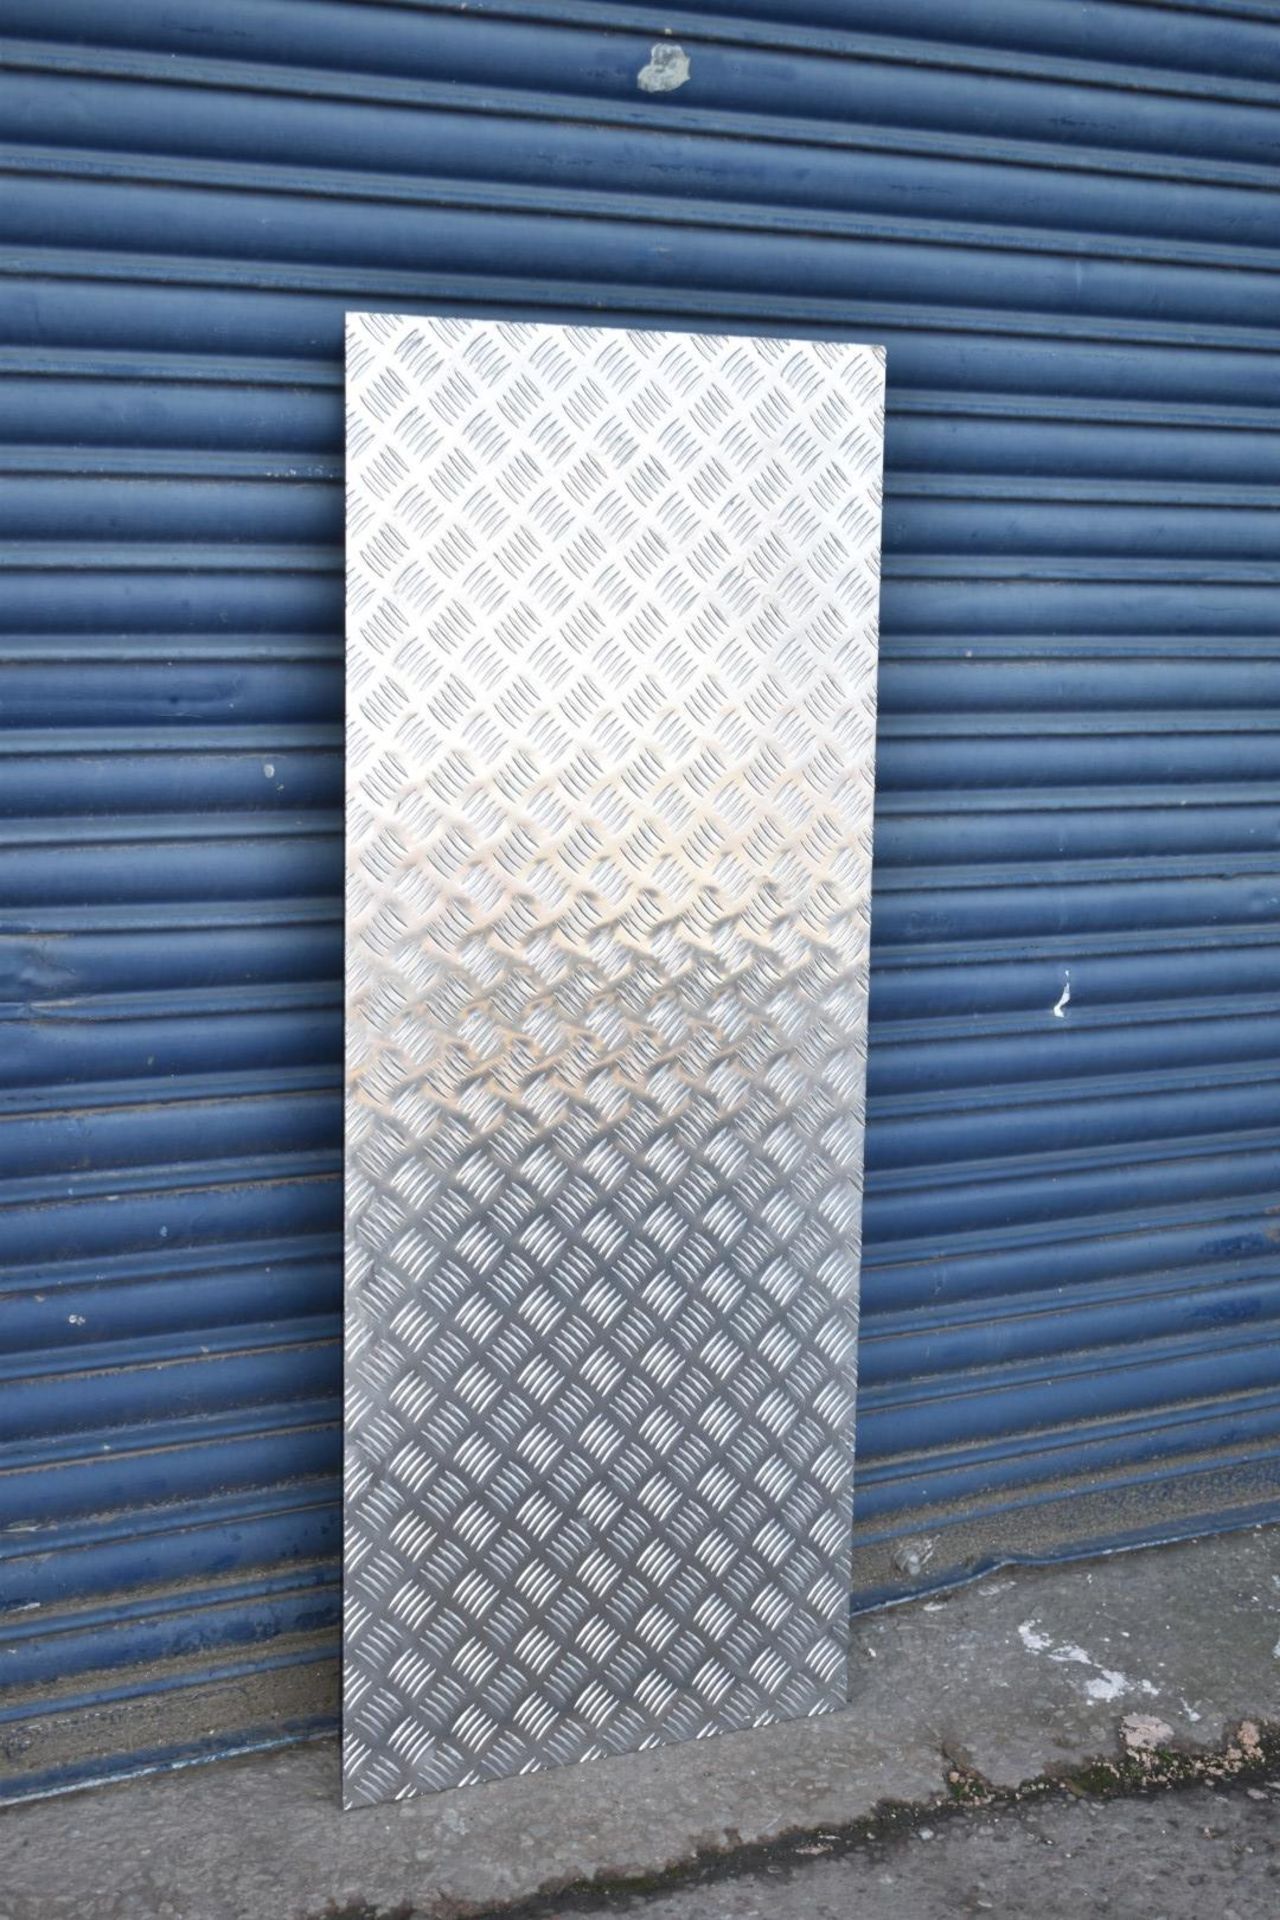 1 x Aluminium Tread Checker Plate - Size 125 x 50.5 x 0.3 cms - None Slip Floor Plate Suitable For